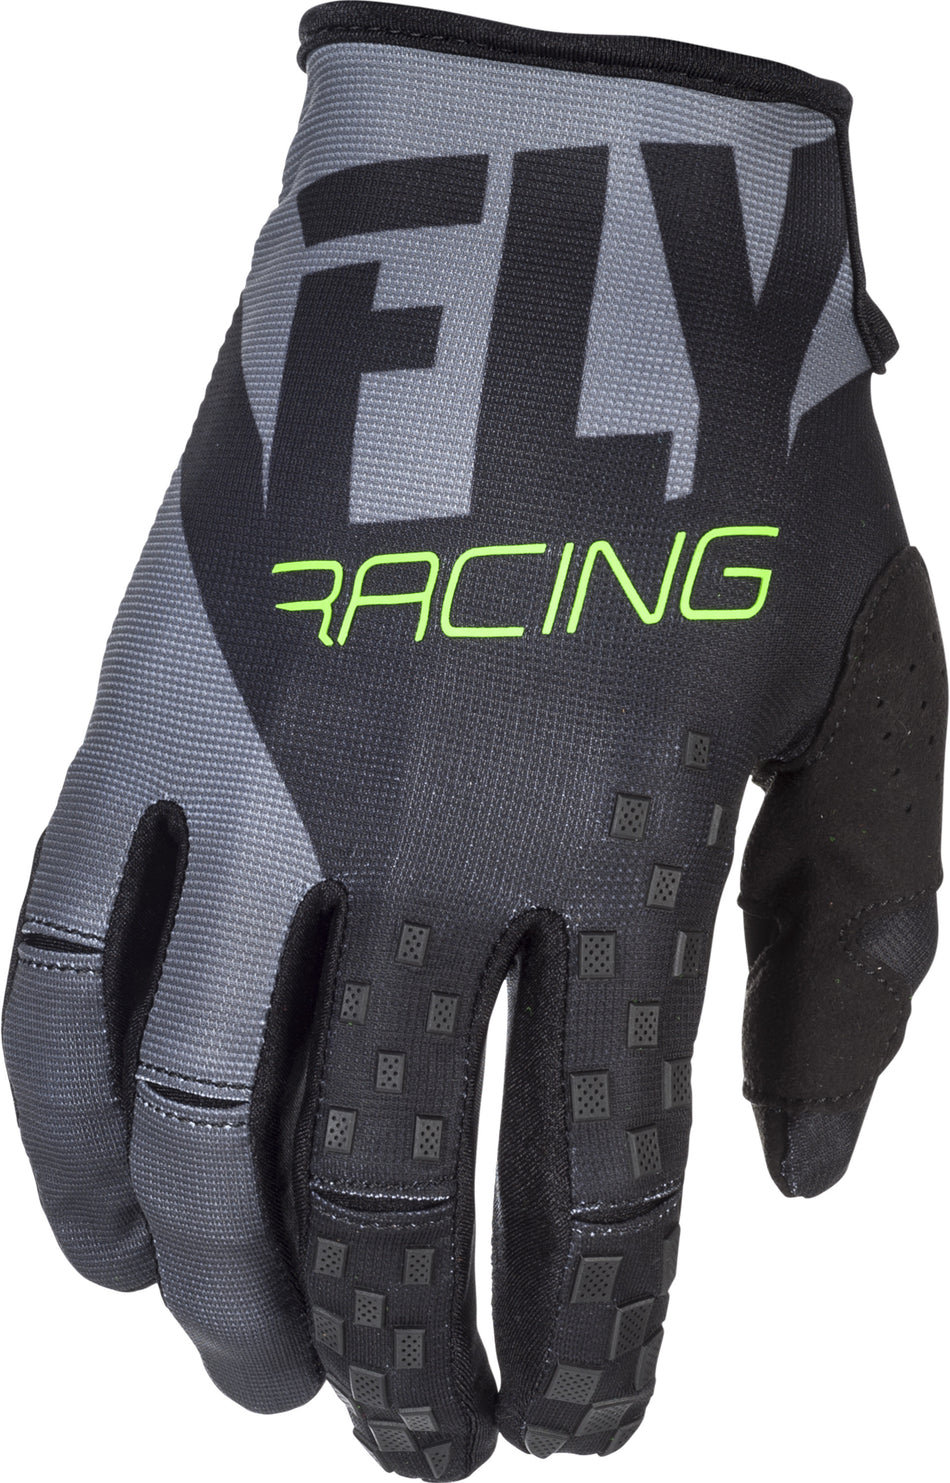 FLY RACING Kinetic Gloves Black/Grey Sz 8 371-41008